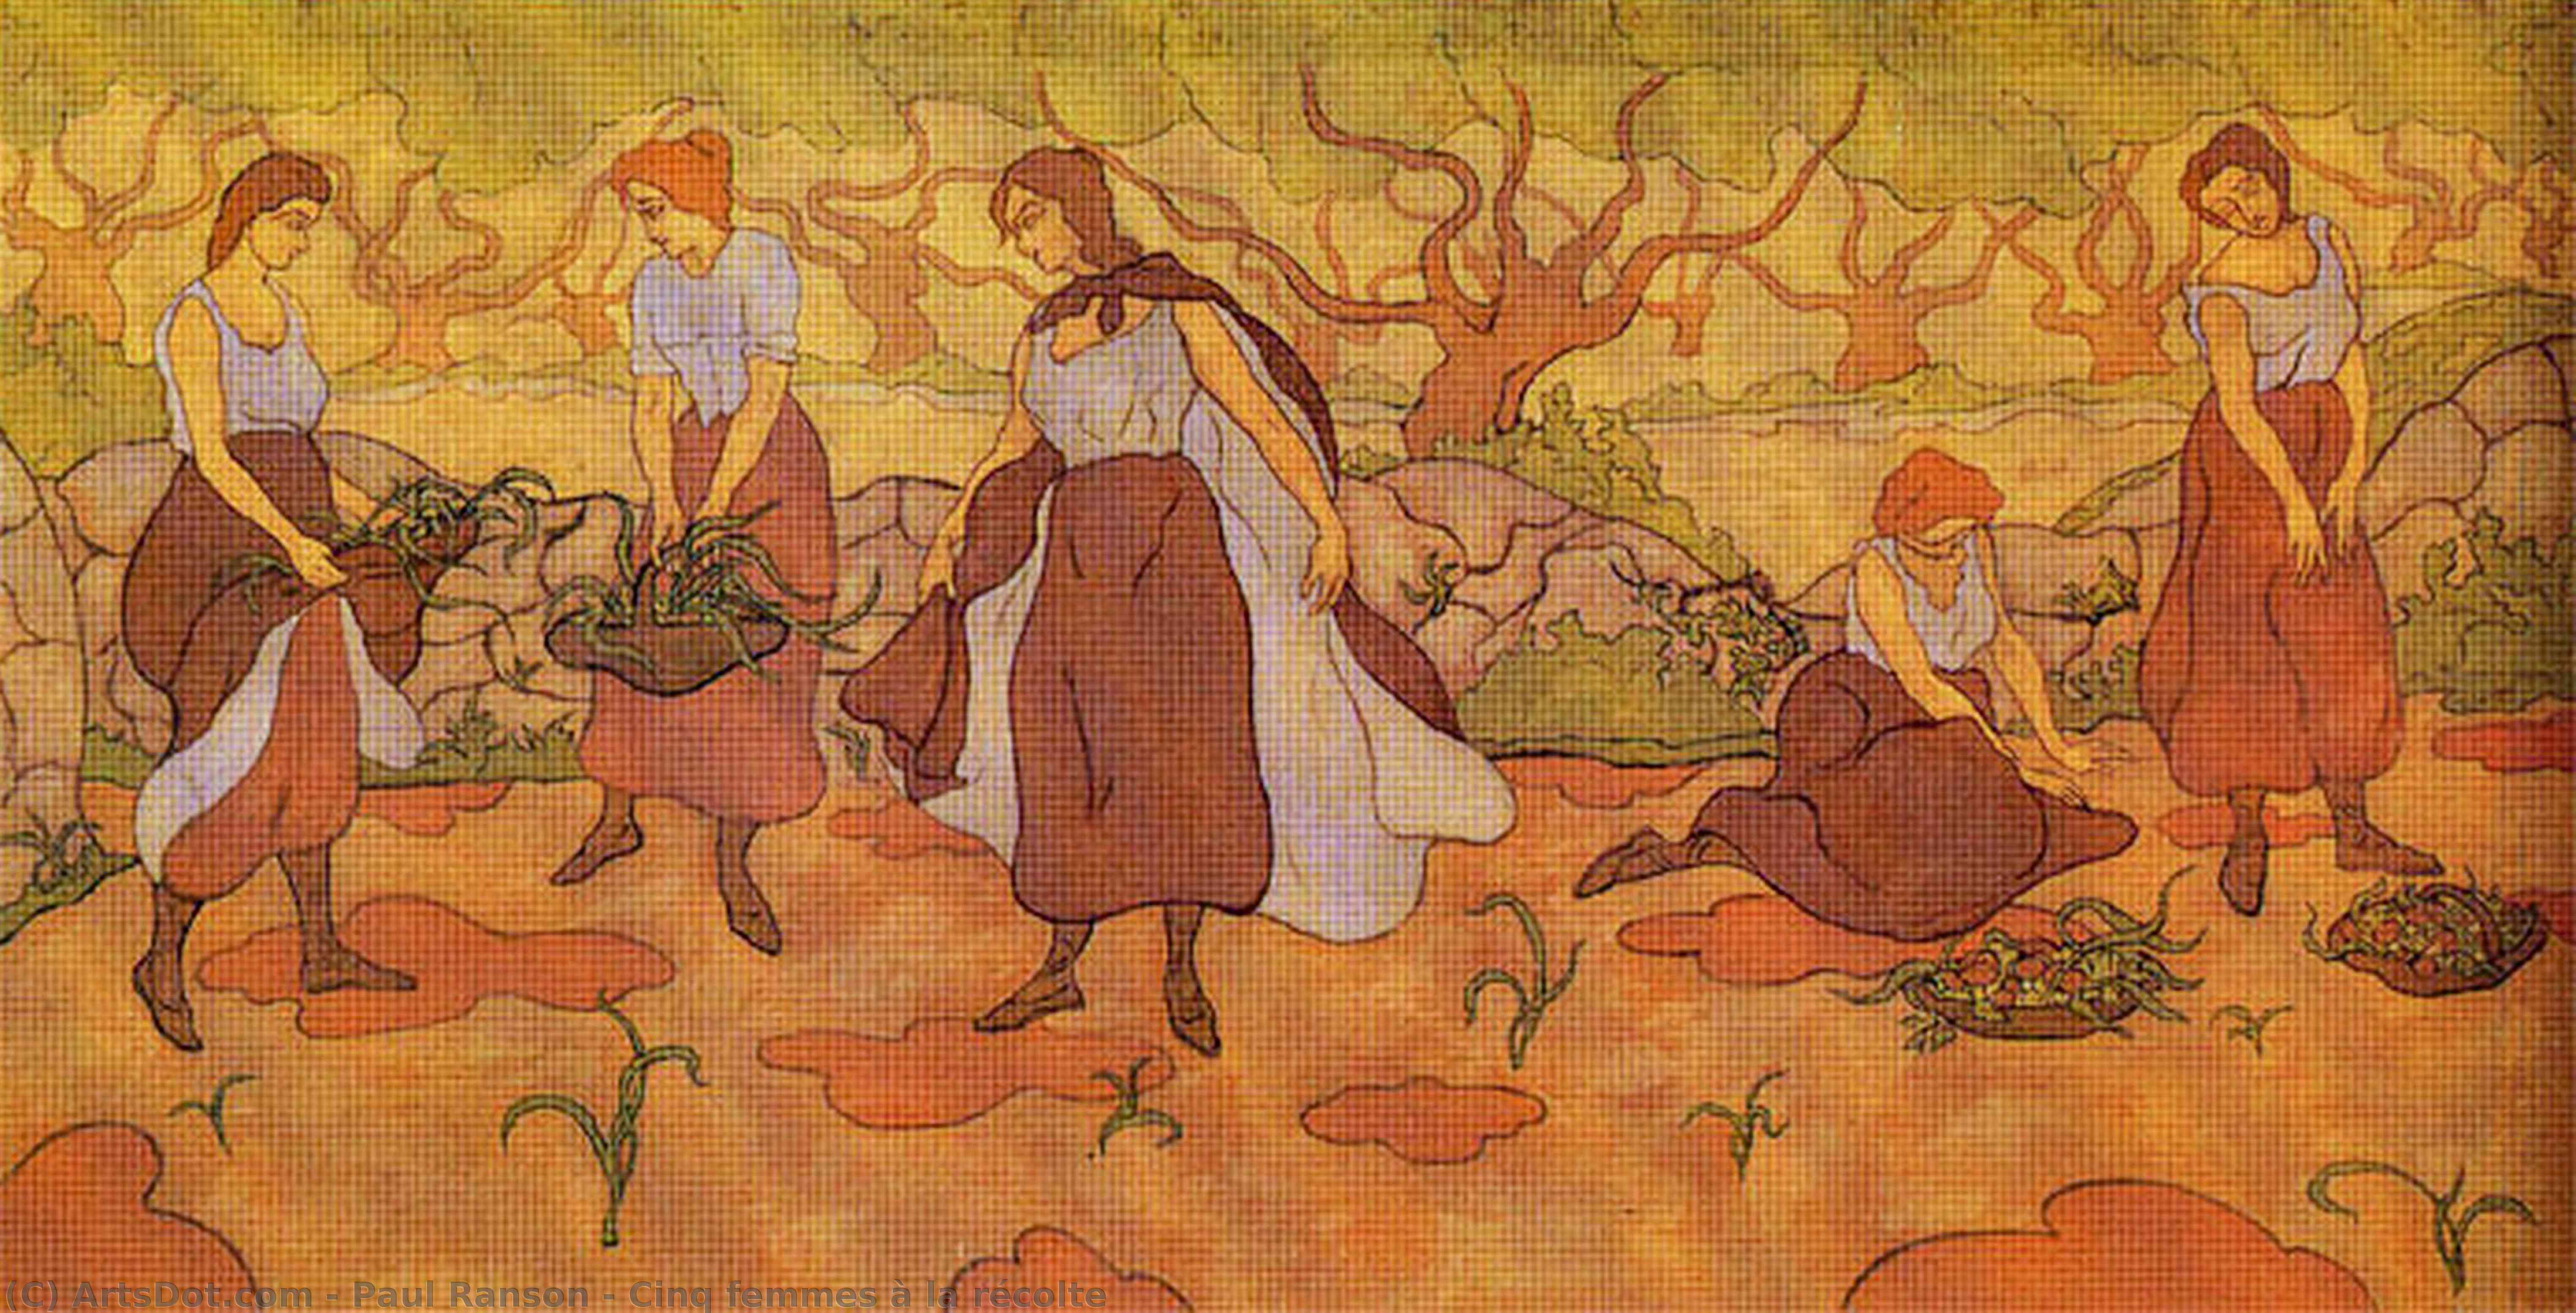 Wikioo.org – L'Enciclopedia delle Belle Arti - Pittura, Opere di Paul Ranson - Cinq femmes un la récolte